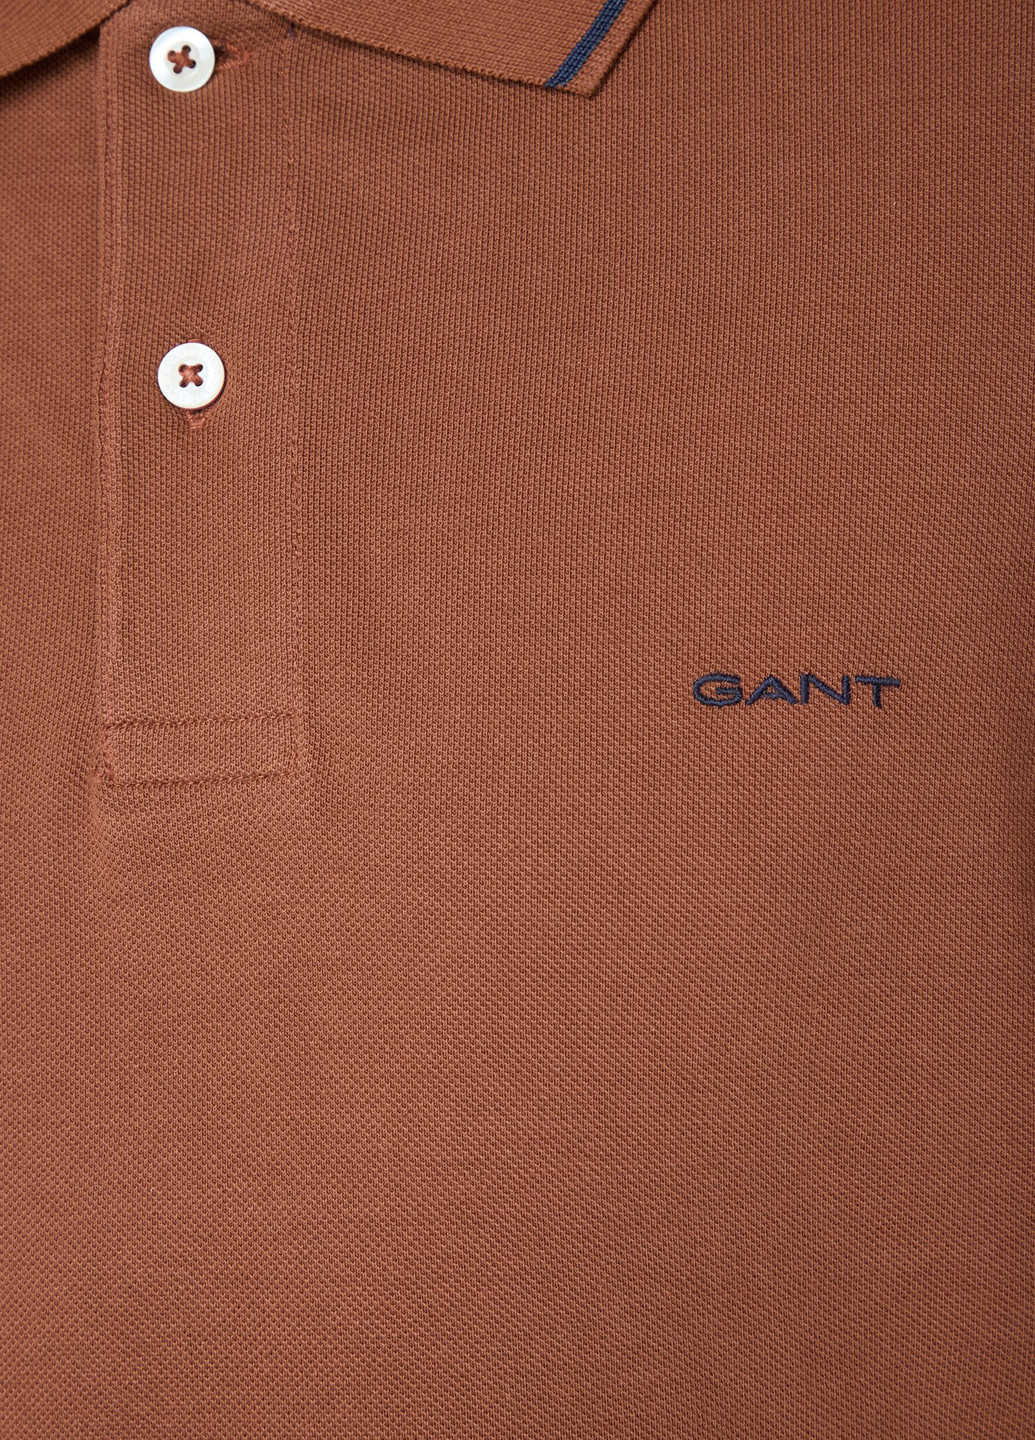 Коричневая футболка-поло для мужчин Gant с логотипом